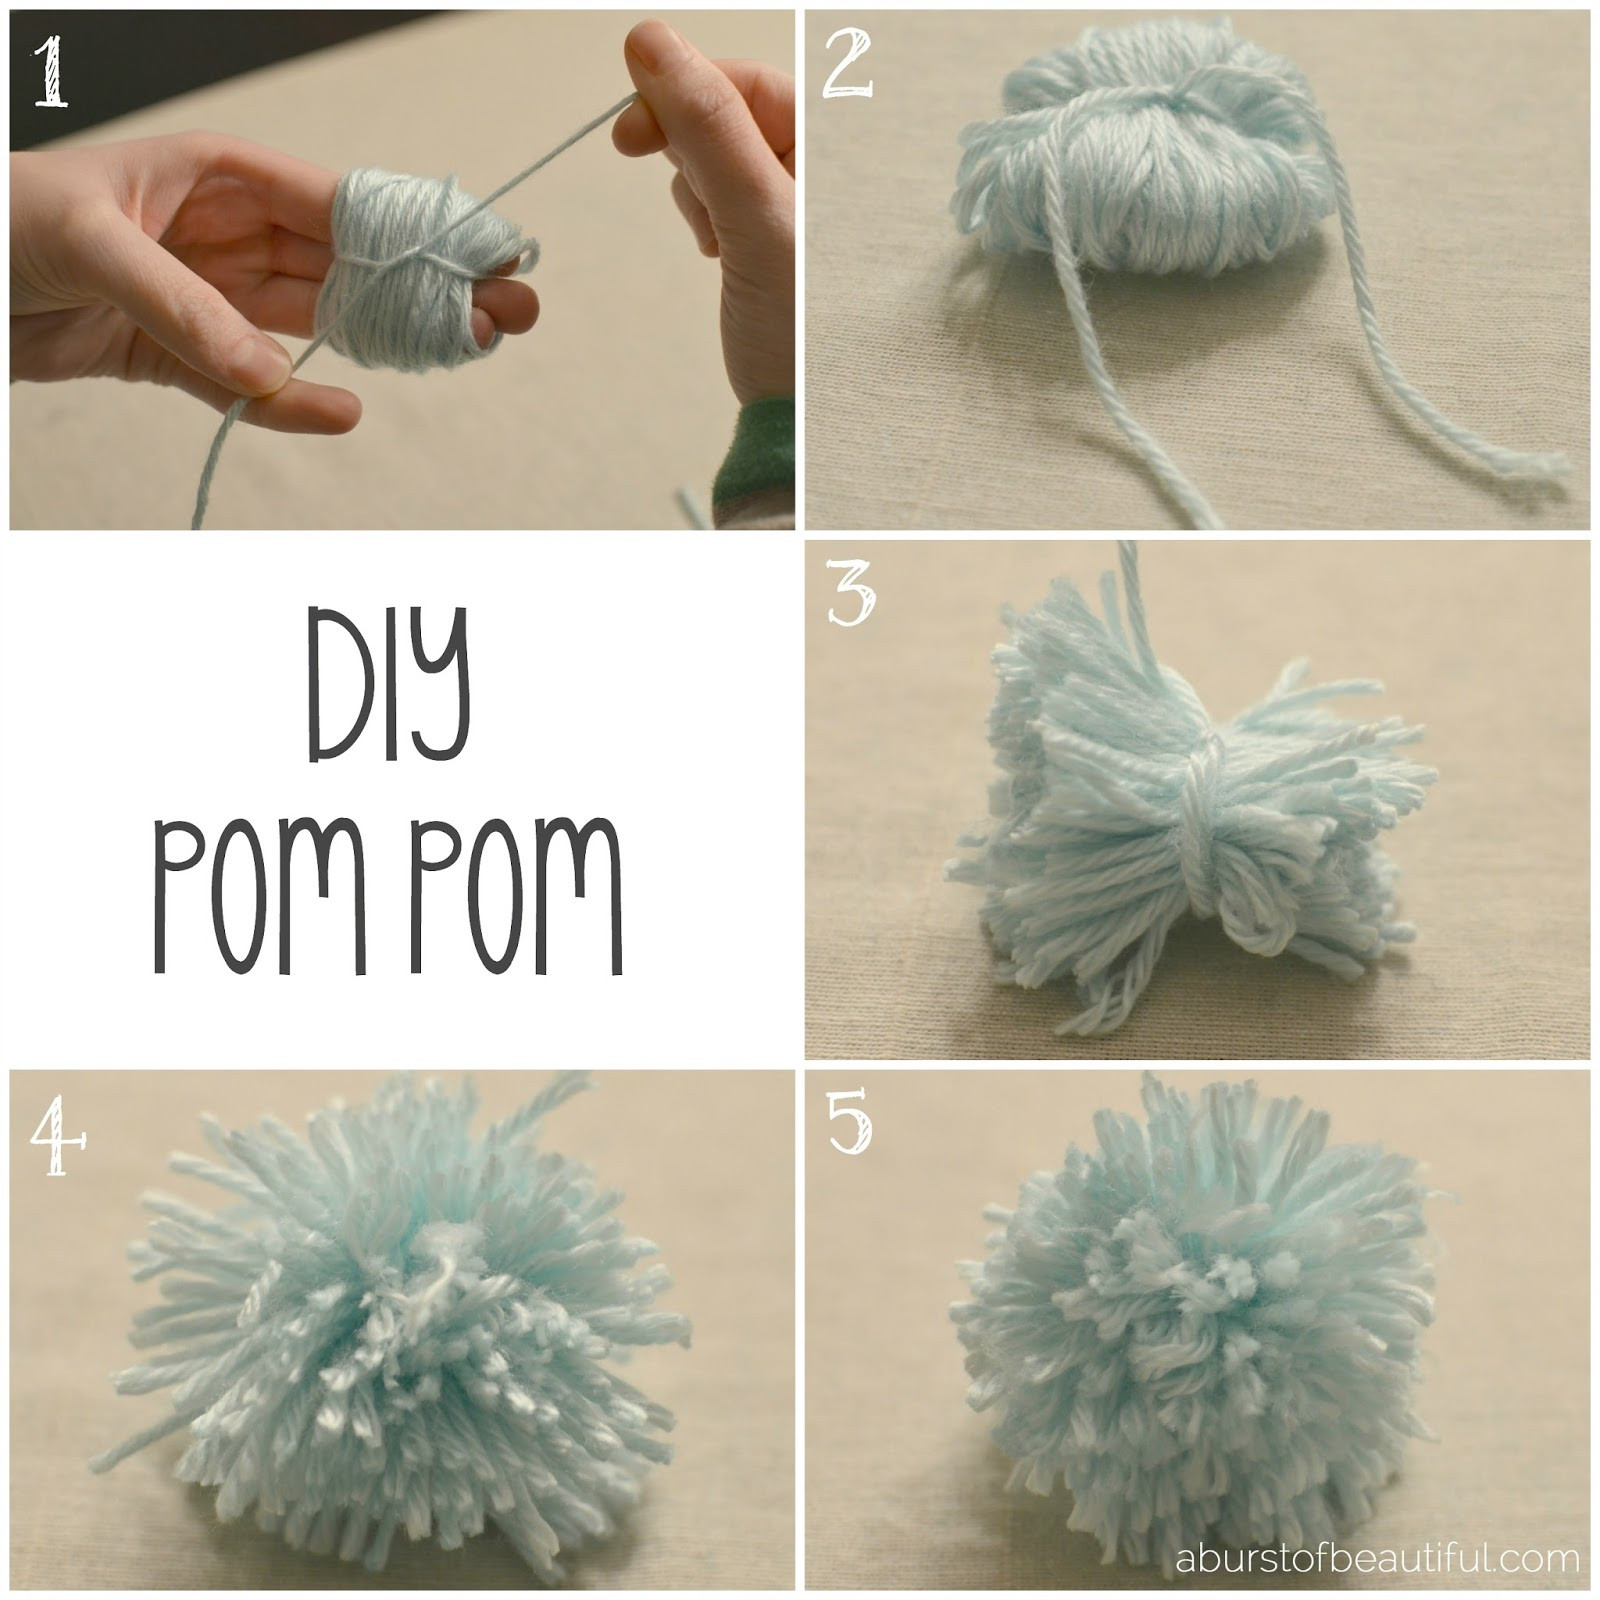 Best ideas about DIY Pom Pom
. Save or Pin DIY Pom Pom Mobile A Burst of Beautiful Now.